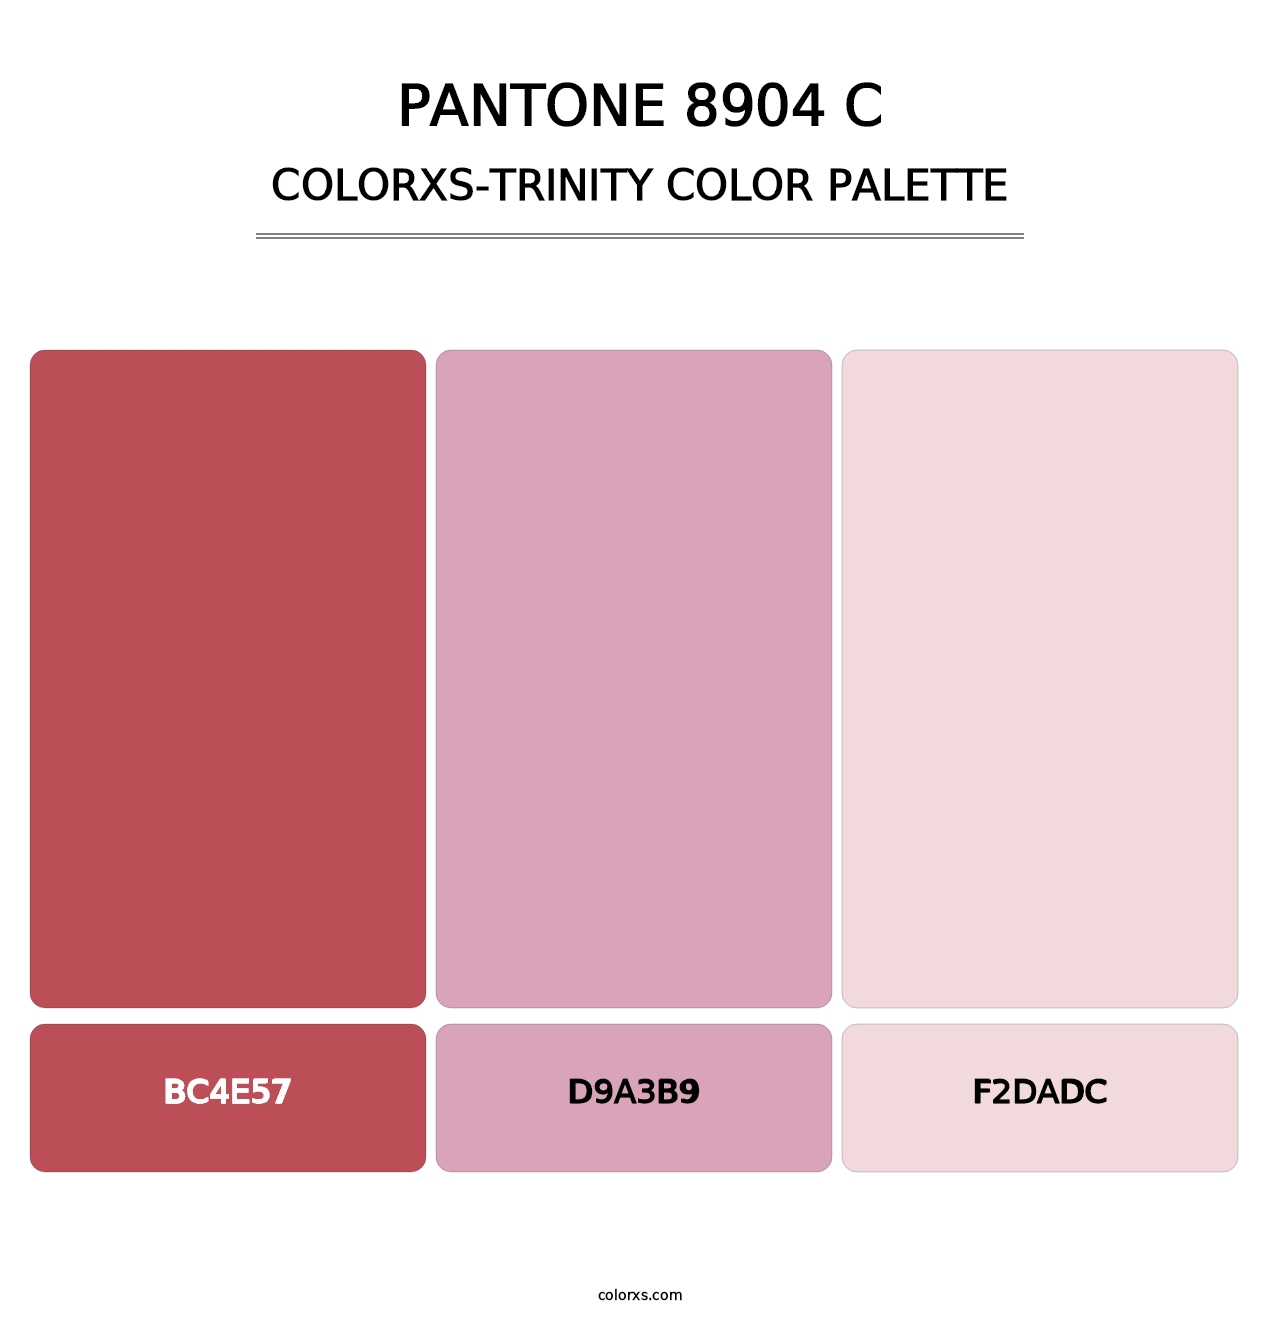 PANTONE 8904 C - Colorxs Trinity Palette